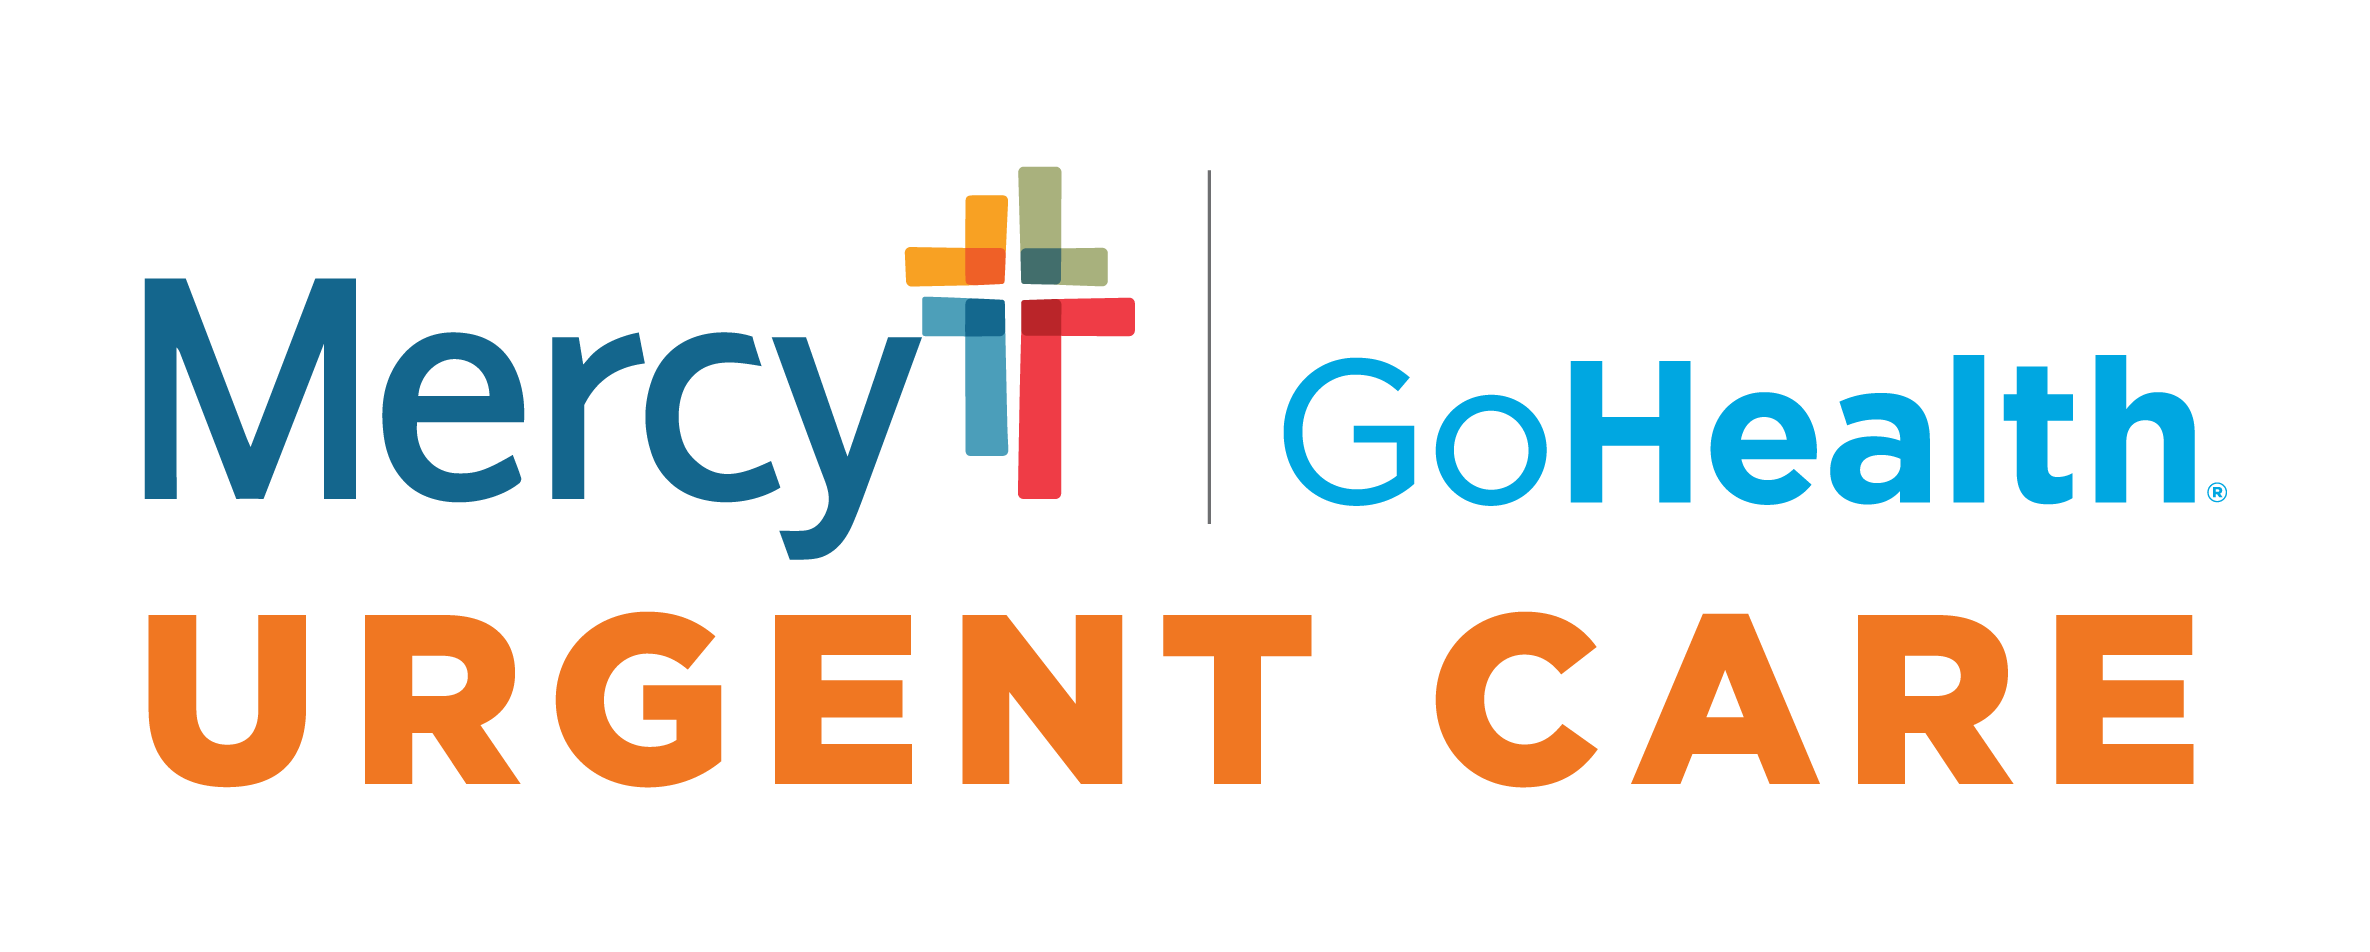 Mercy-GoHealth Urgent Care - St. Peters Logo